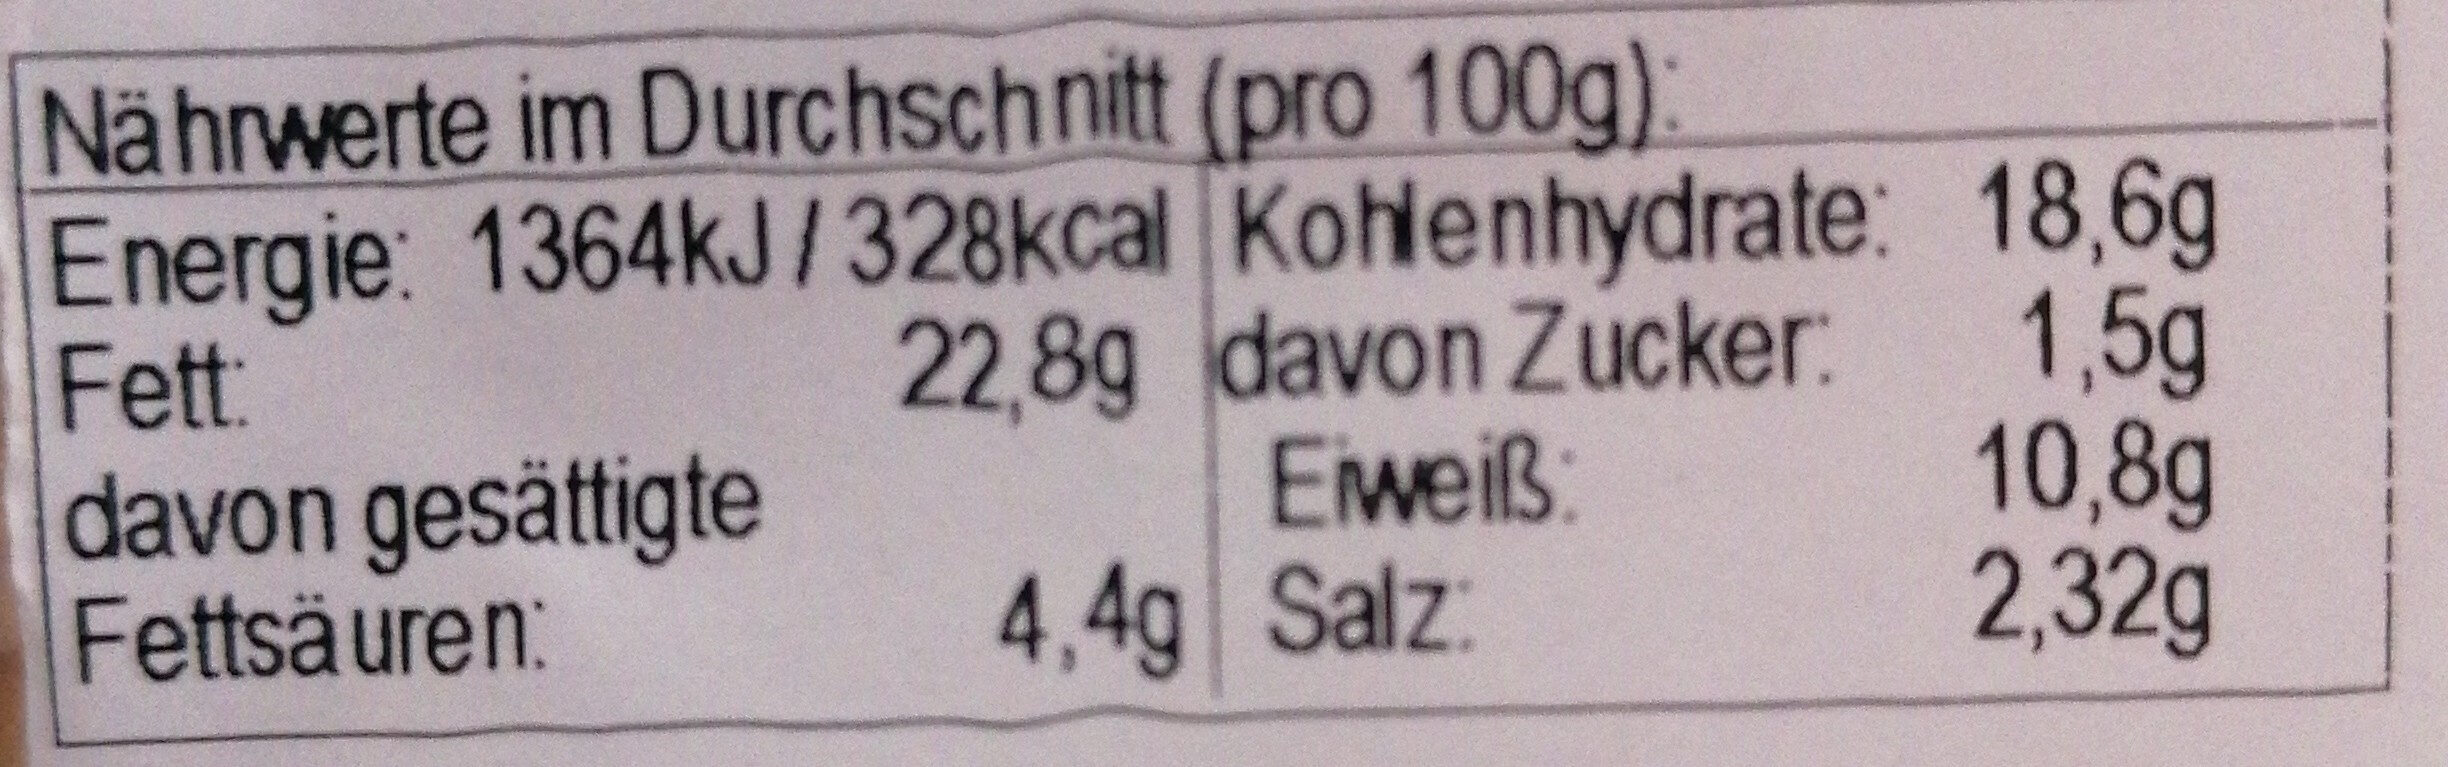 Sandwich Schinken-Käse - Nutrition facts - de